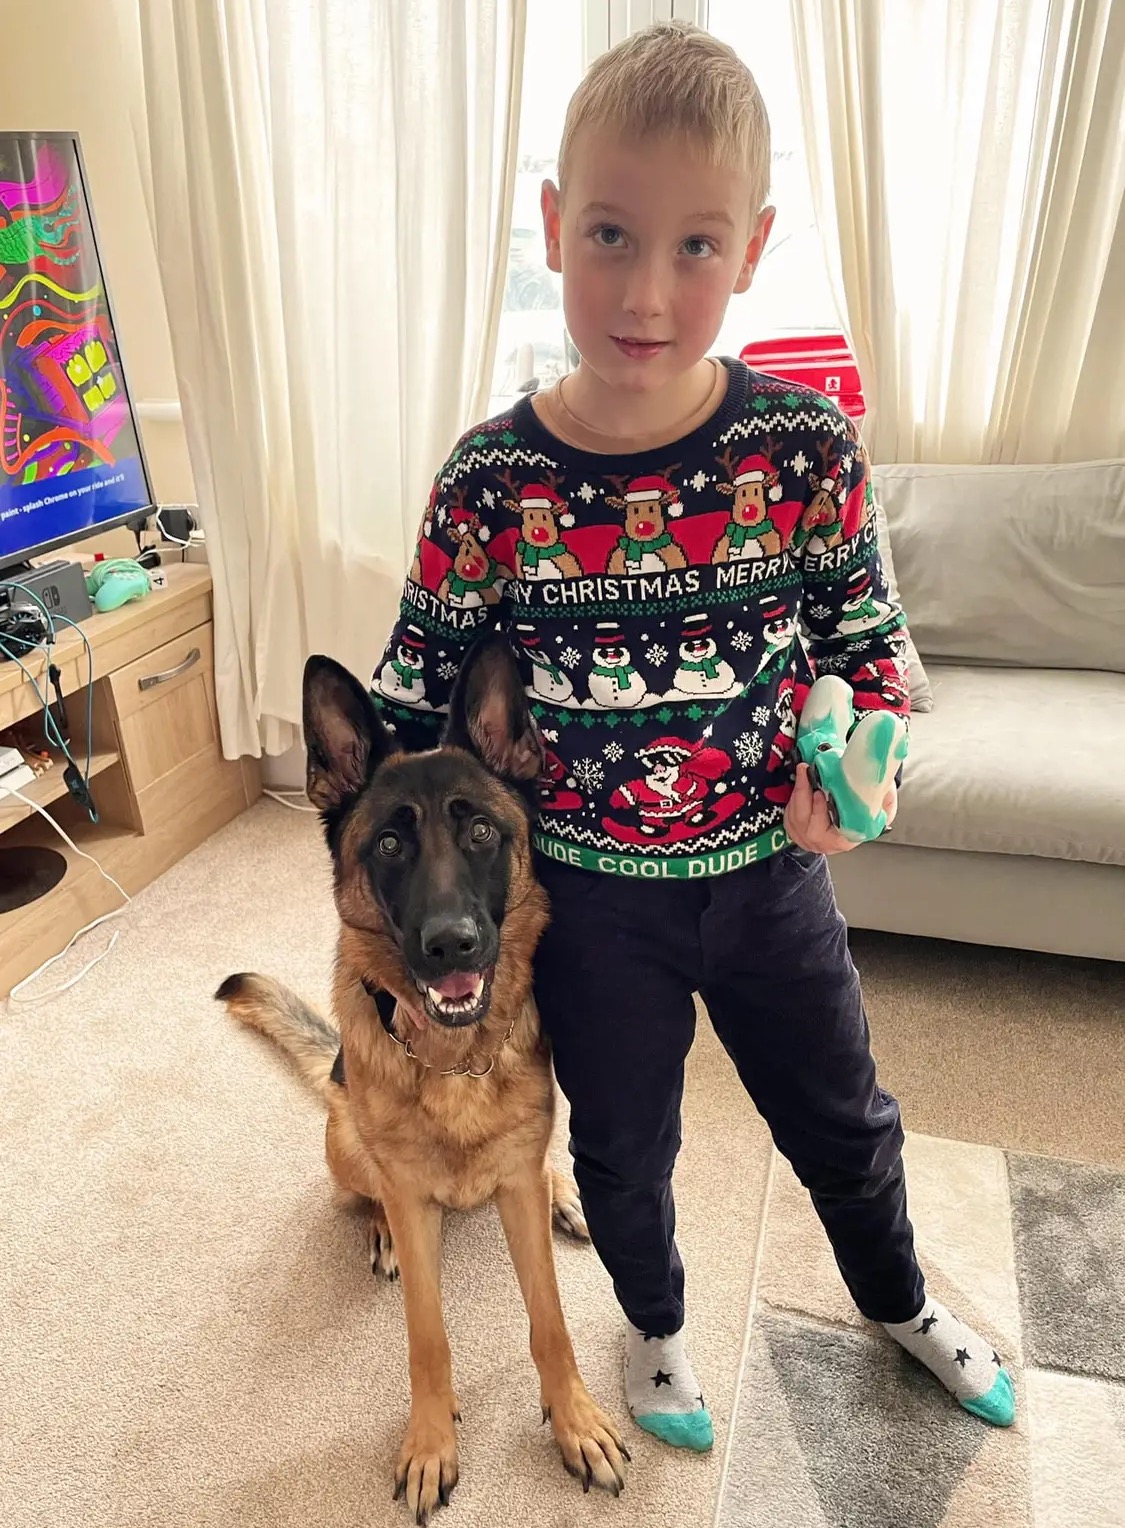 Boy wearing a jumper standing next to a dog